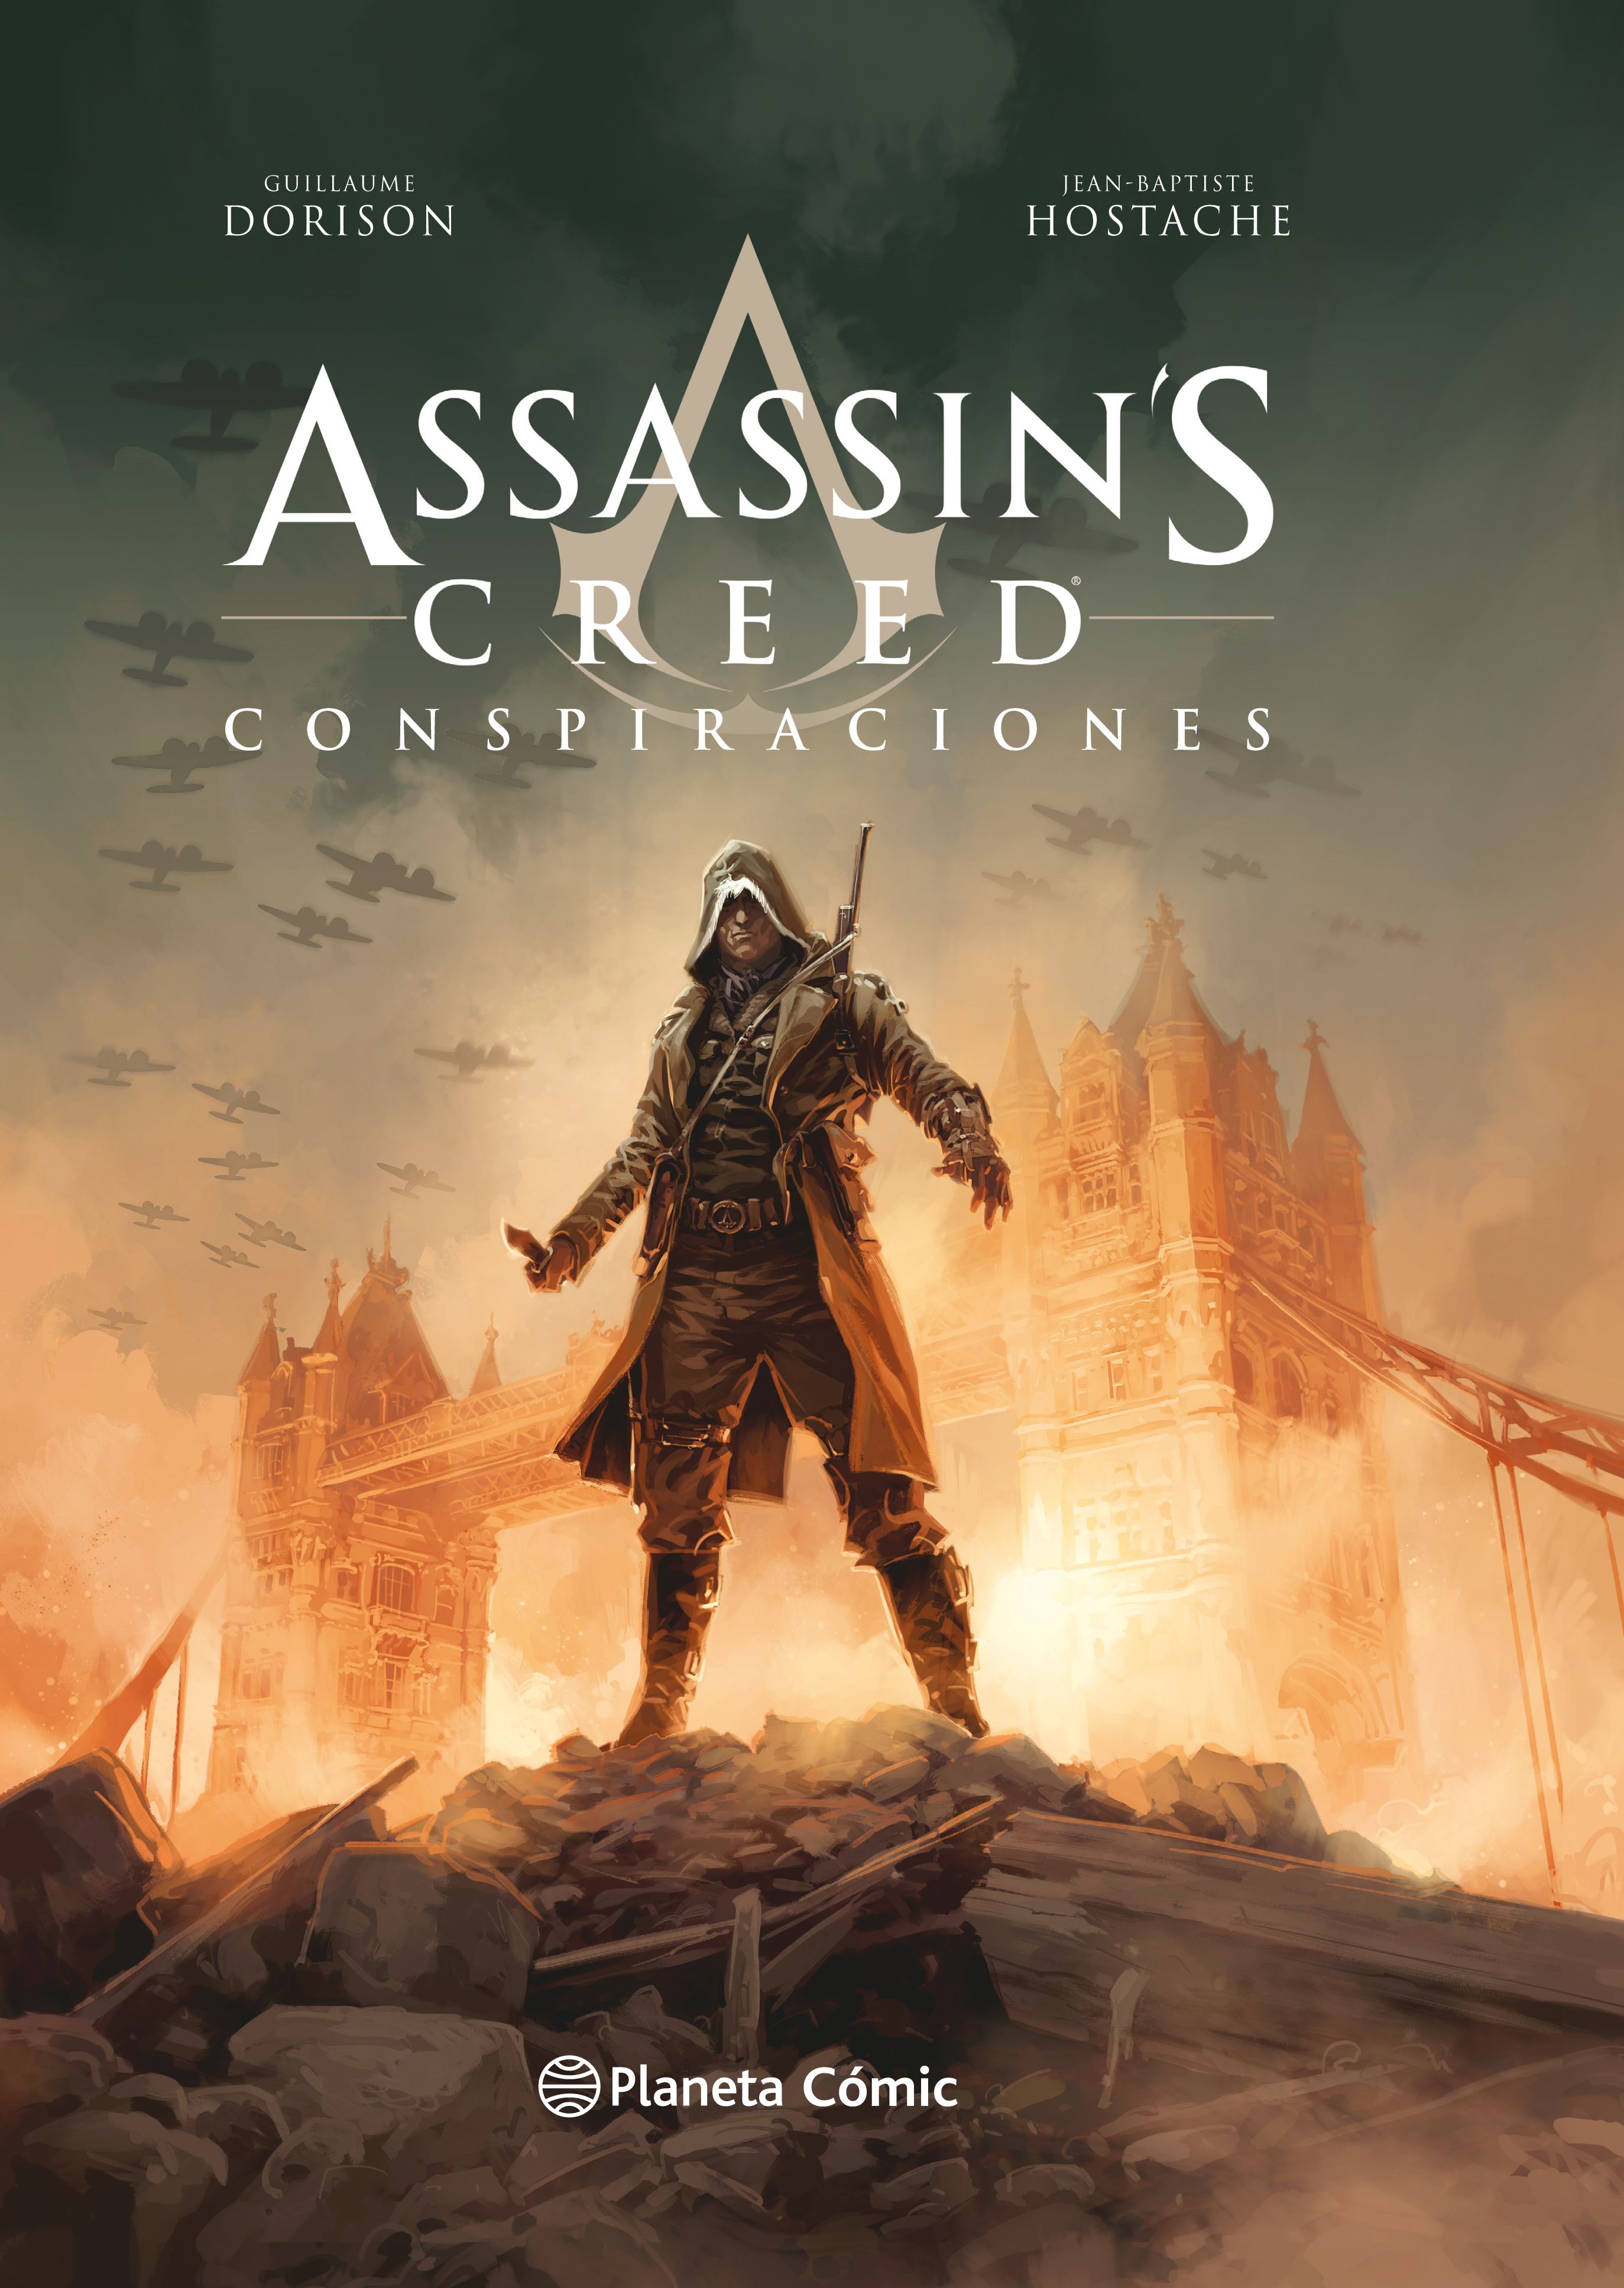 Imágenes del Gameplay de Assassin's Creed 3 | Assassin's Creed Center